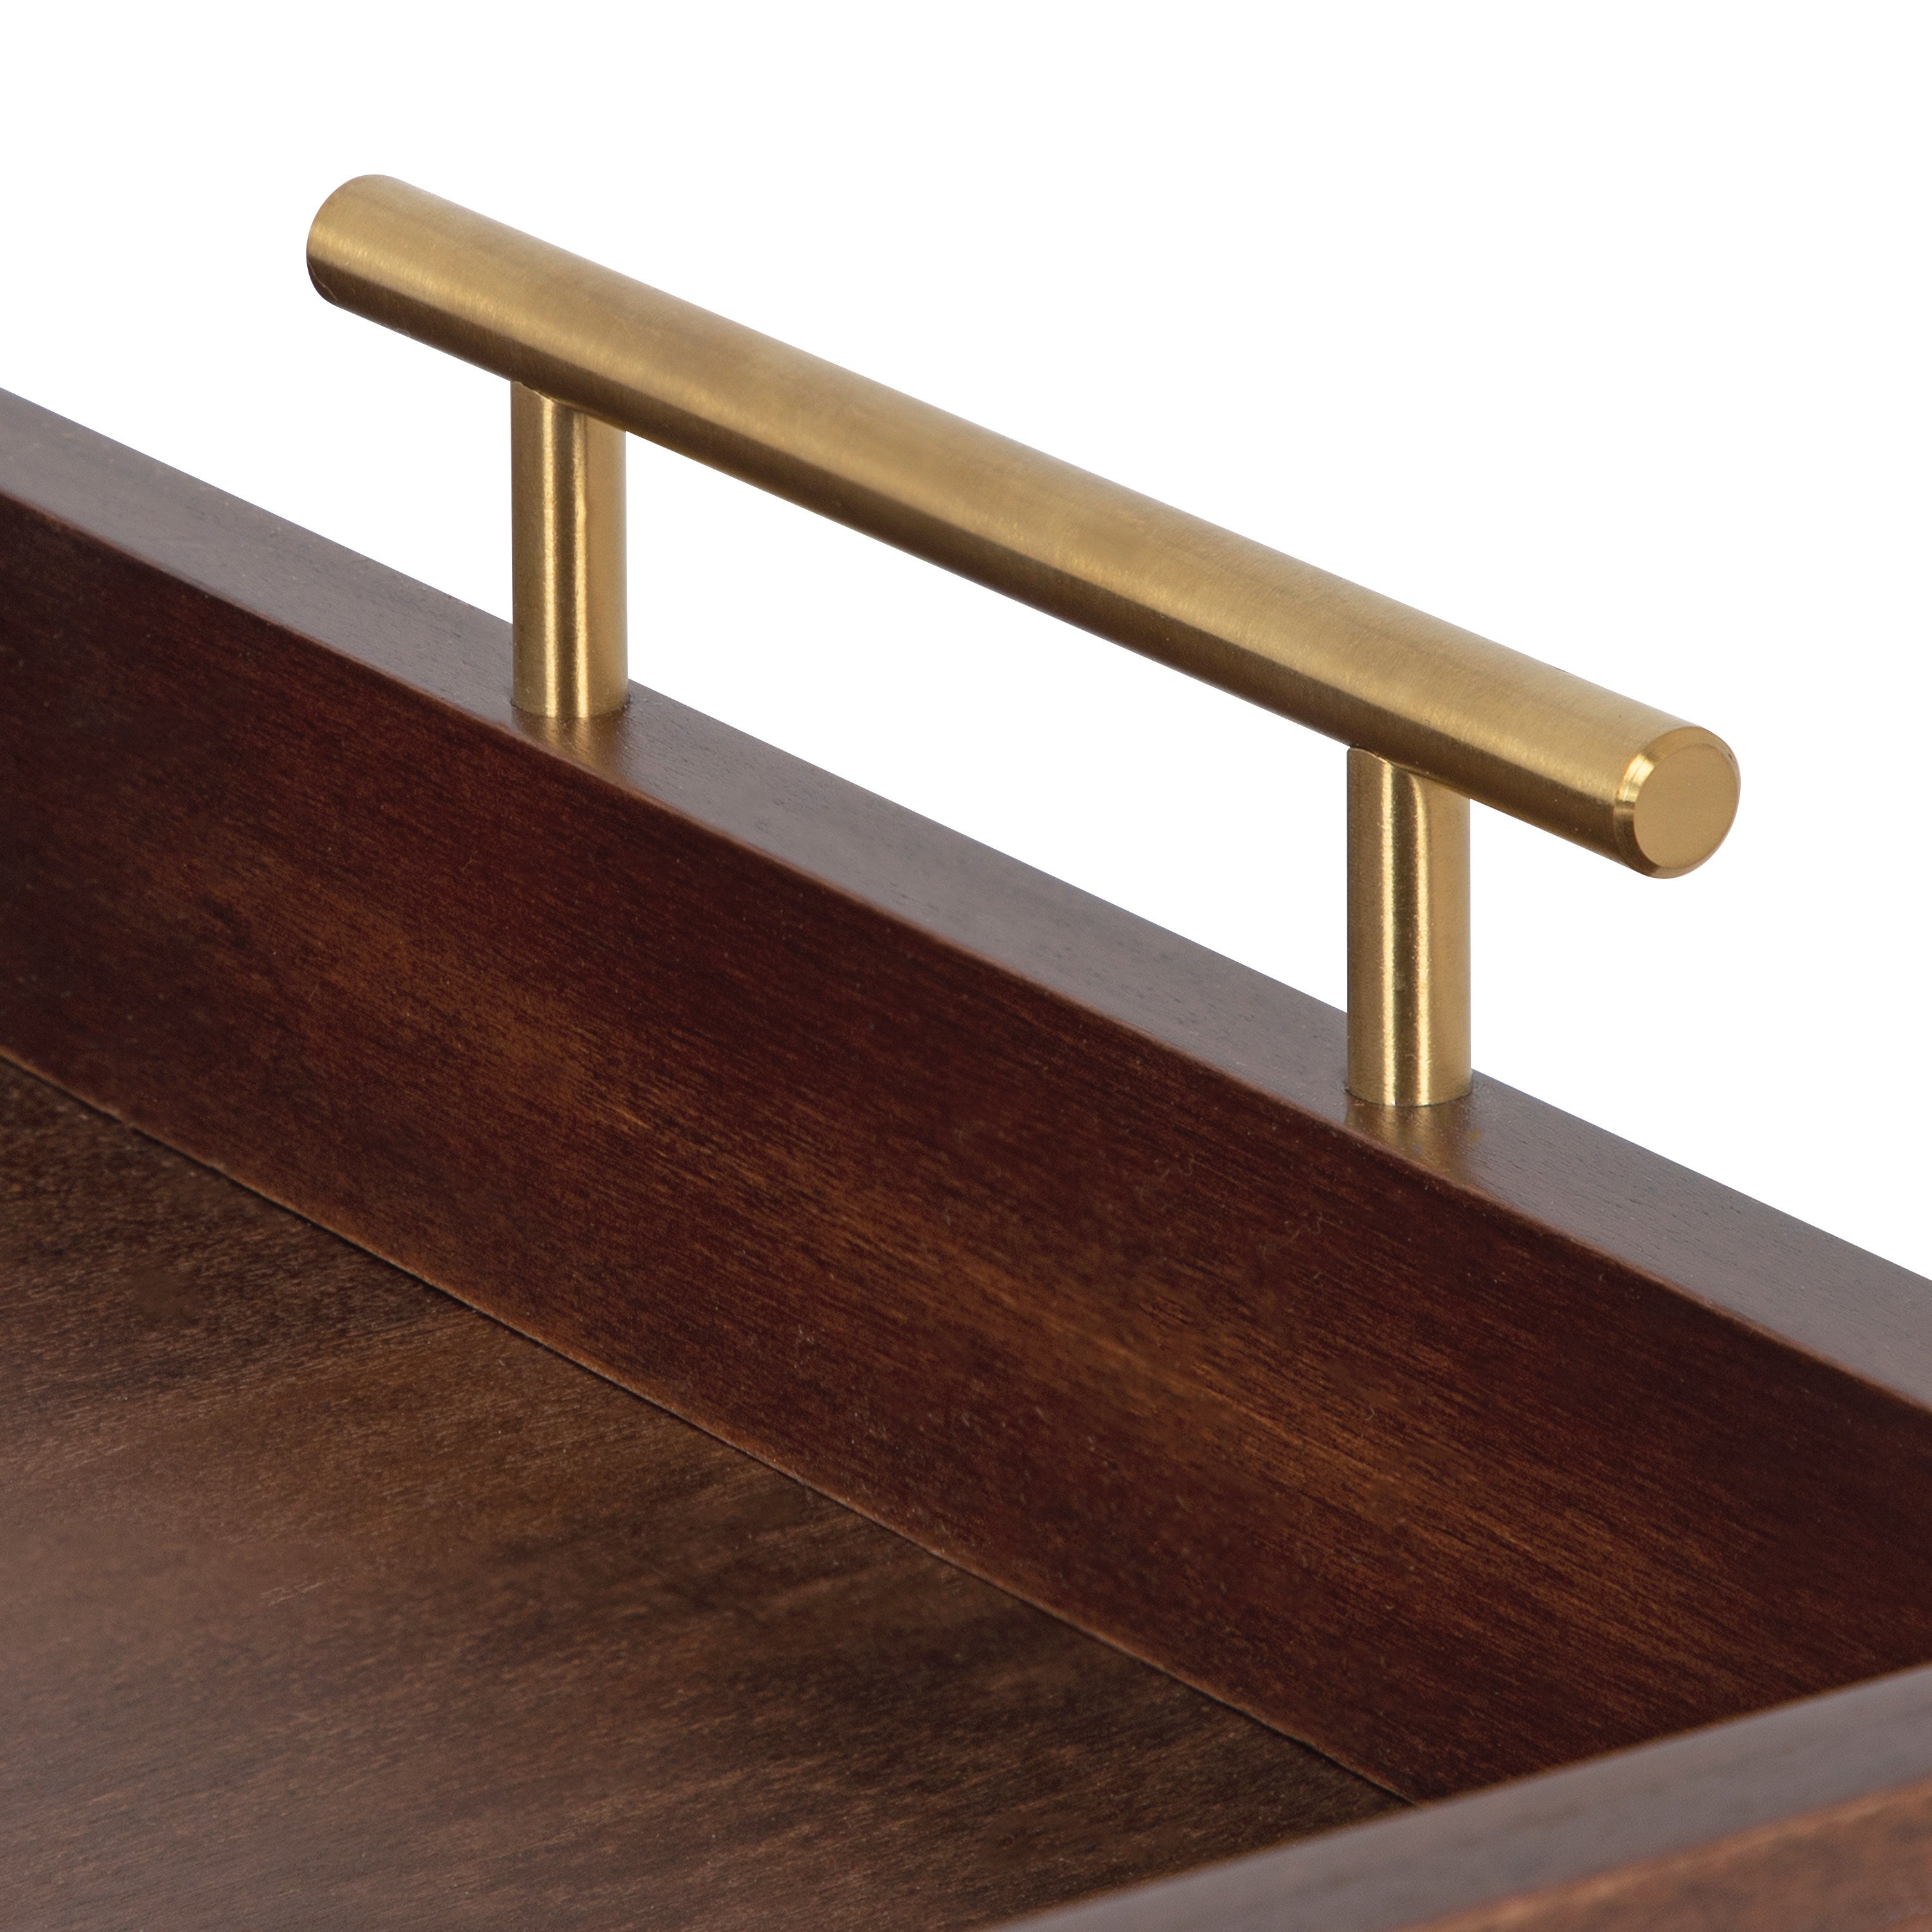 Lipton Decorative Wood Tray with Metal Handles